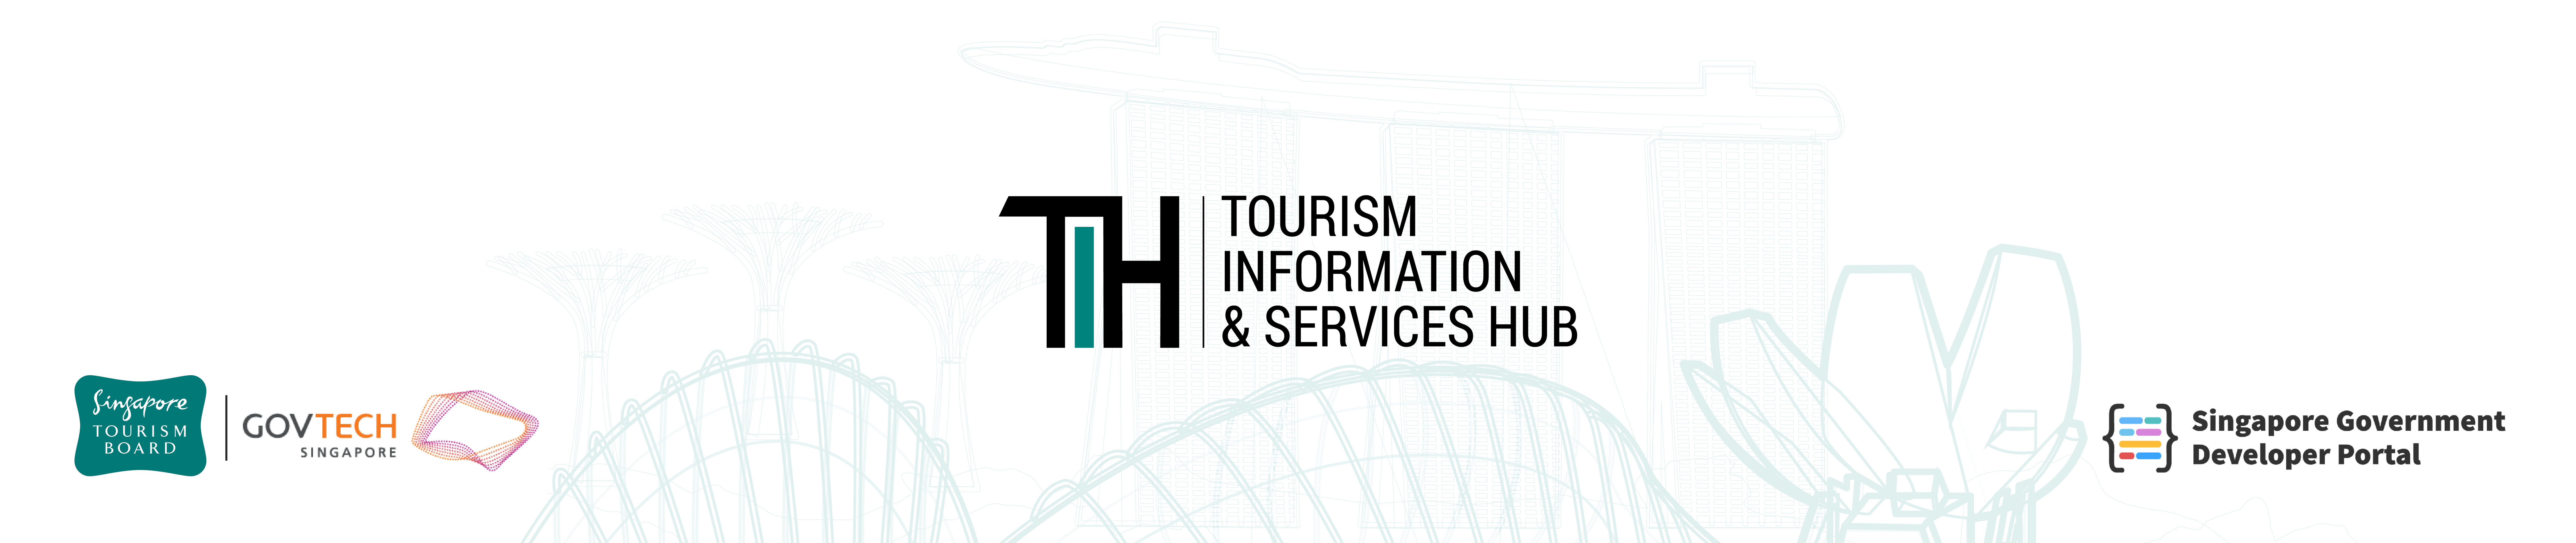 TIH header banner for Singapore Government Developer Portal